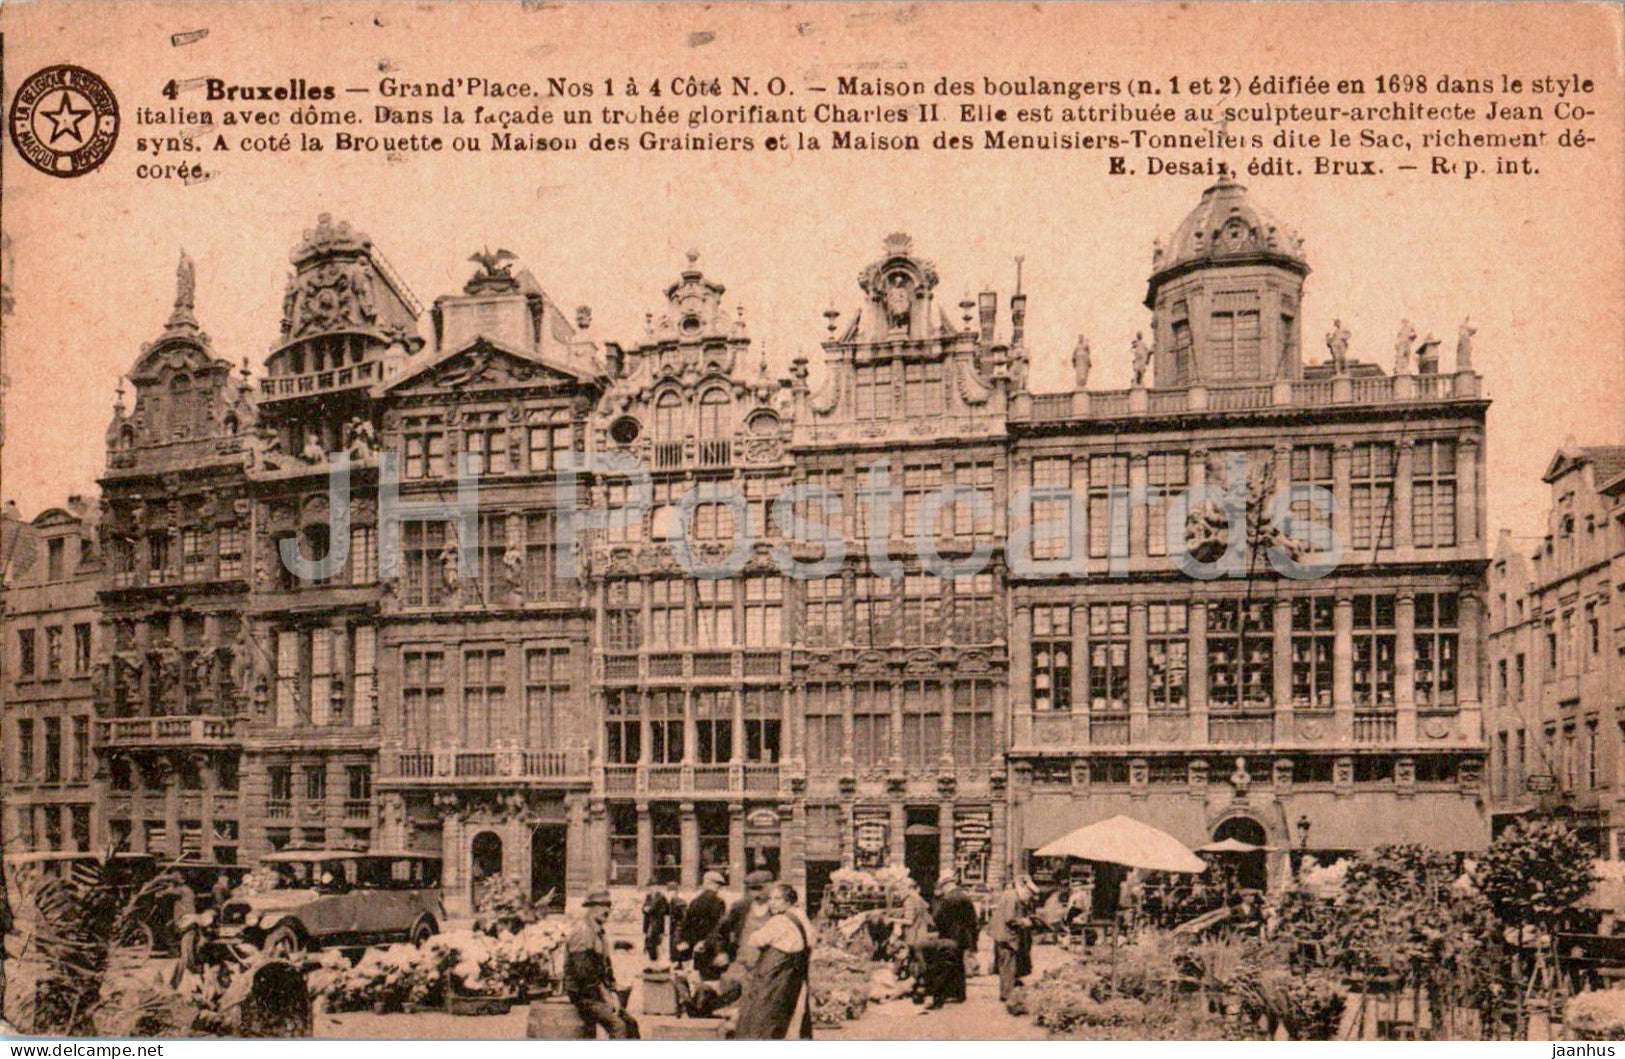 Bruxelles - Brussels - Grand Place - Maison des boulangers - old postcard - 4 - 1931 - Belgium - used